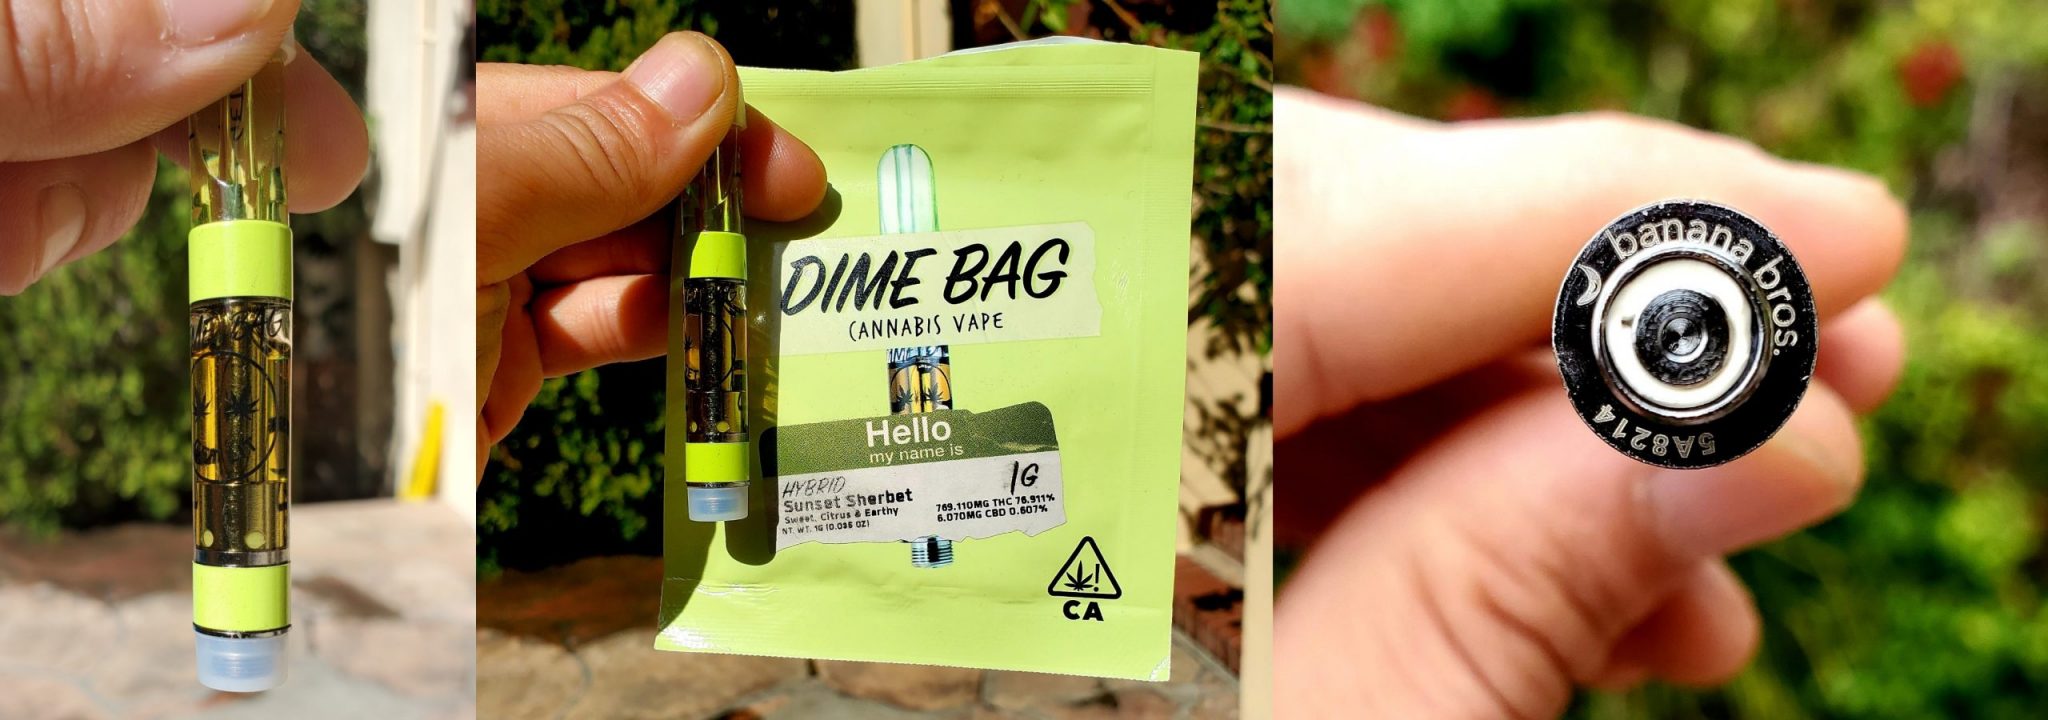 Dime bags stock image. Image of marijuana, weed, bags - 96694011